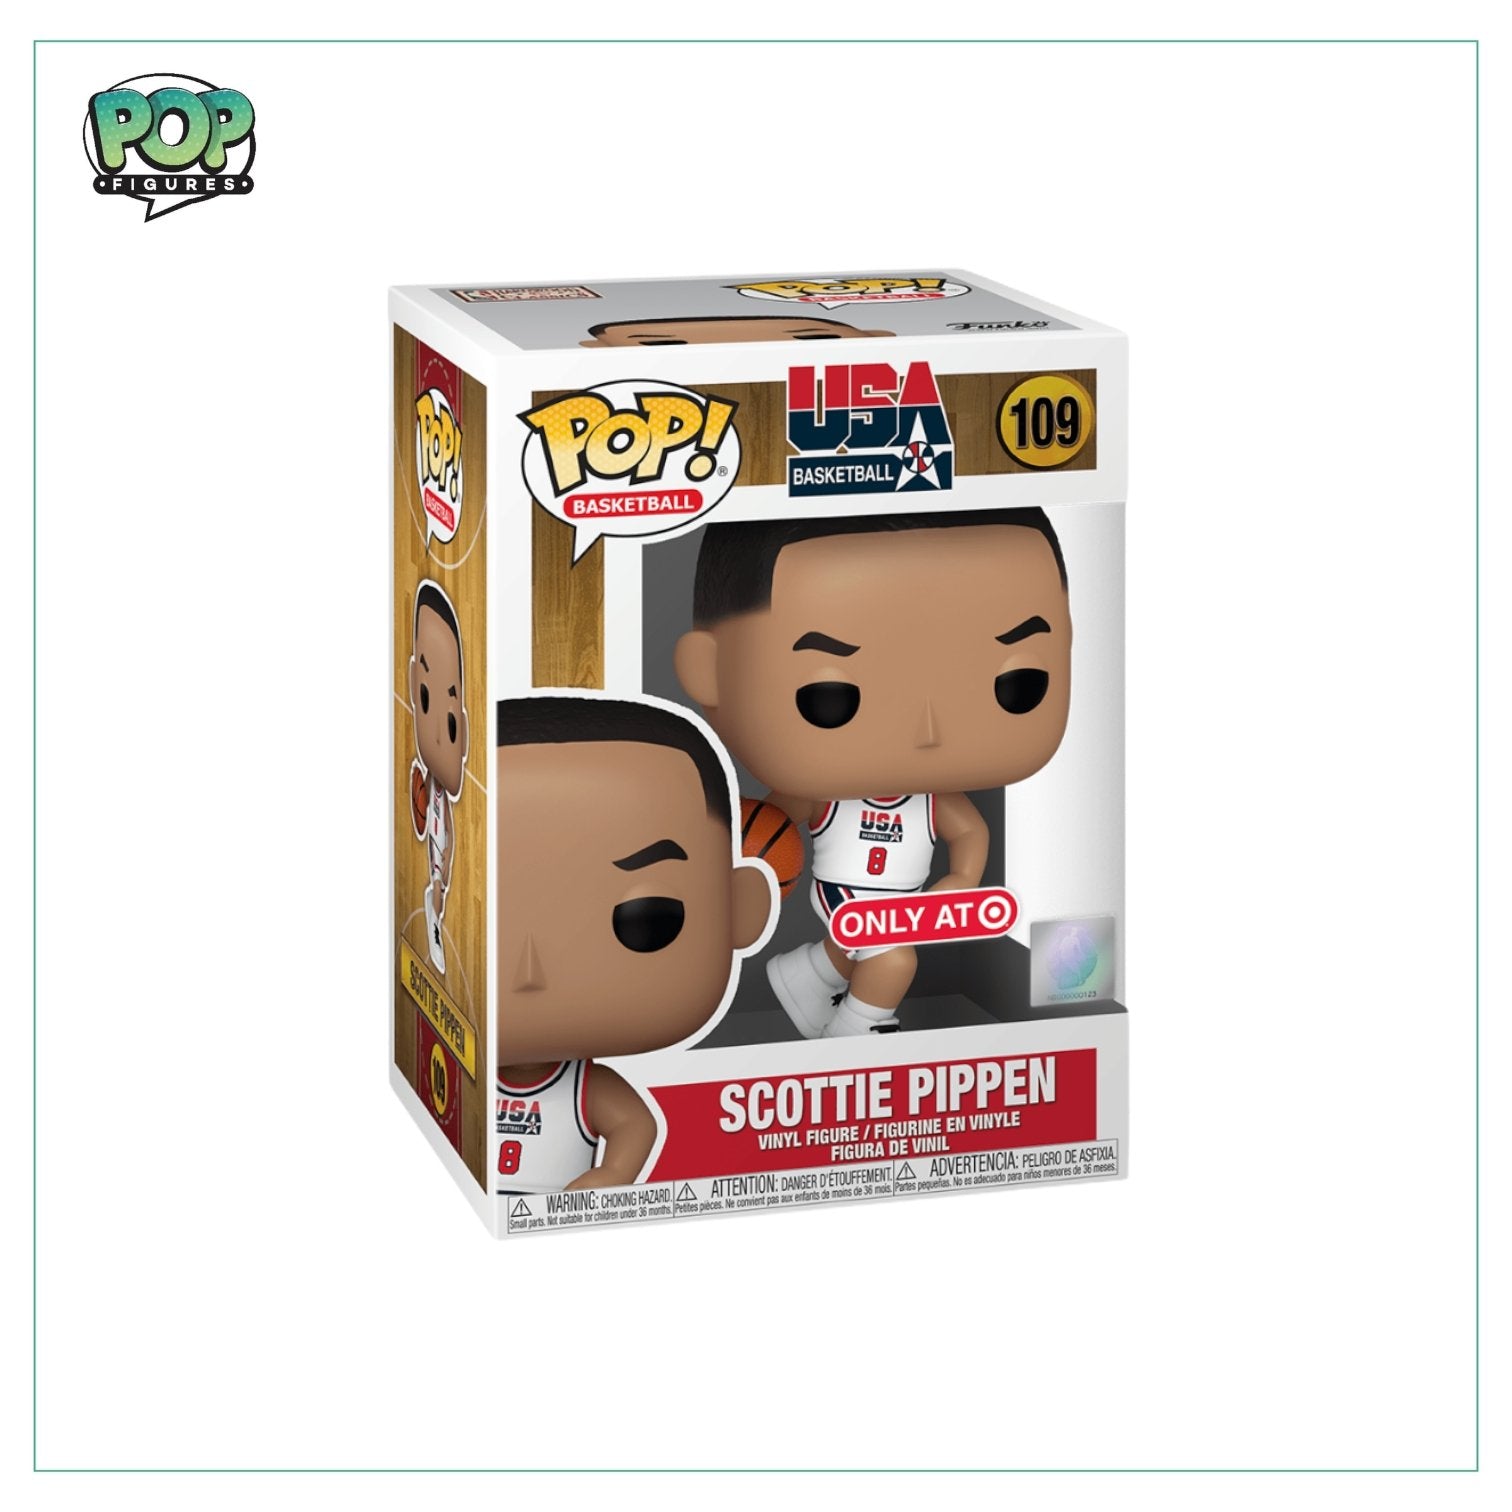 USA Basketball - Scottie Pippen - Target Exclusive - PREORDER - Pop Figures | Funko | Pop Funko | Funko Pop